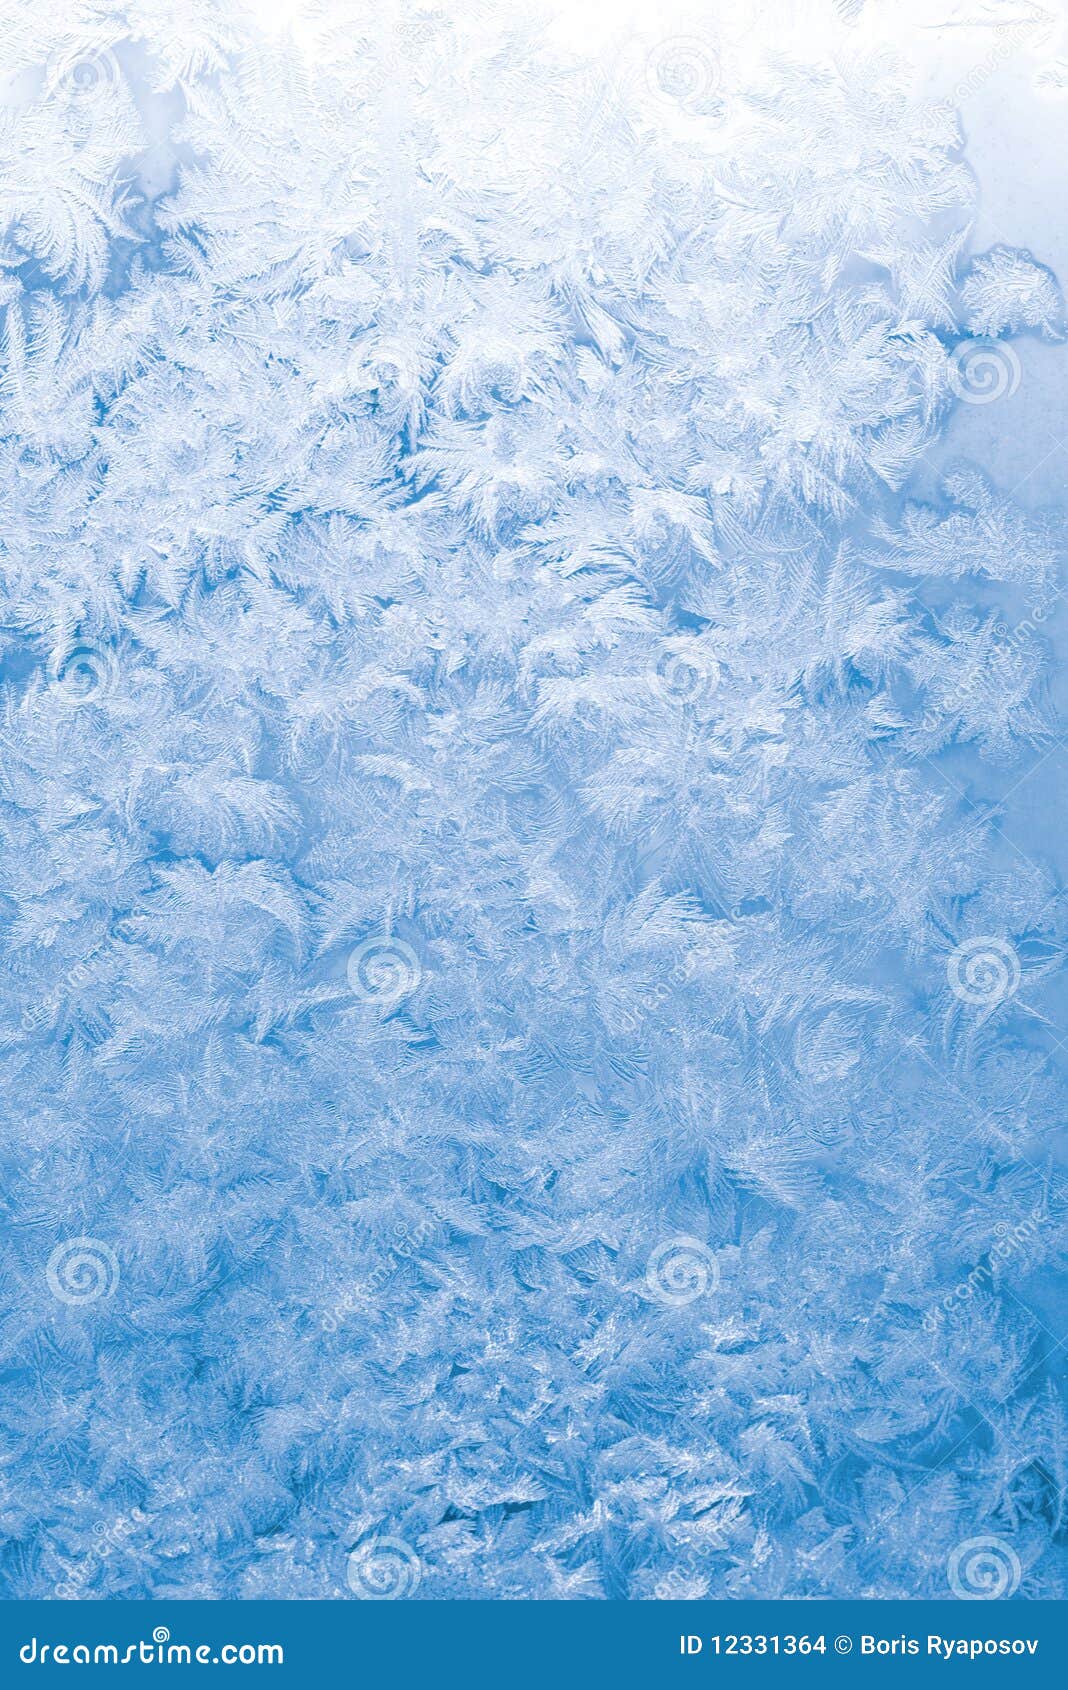 Light Blue Frozen Window Glass Stock Images  Image: 12331364